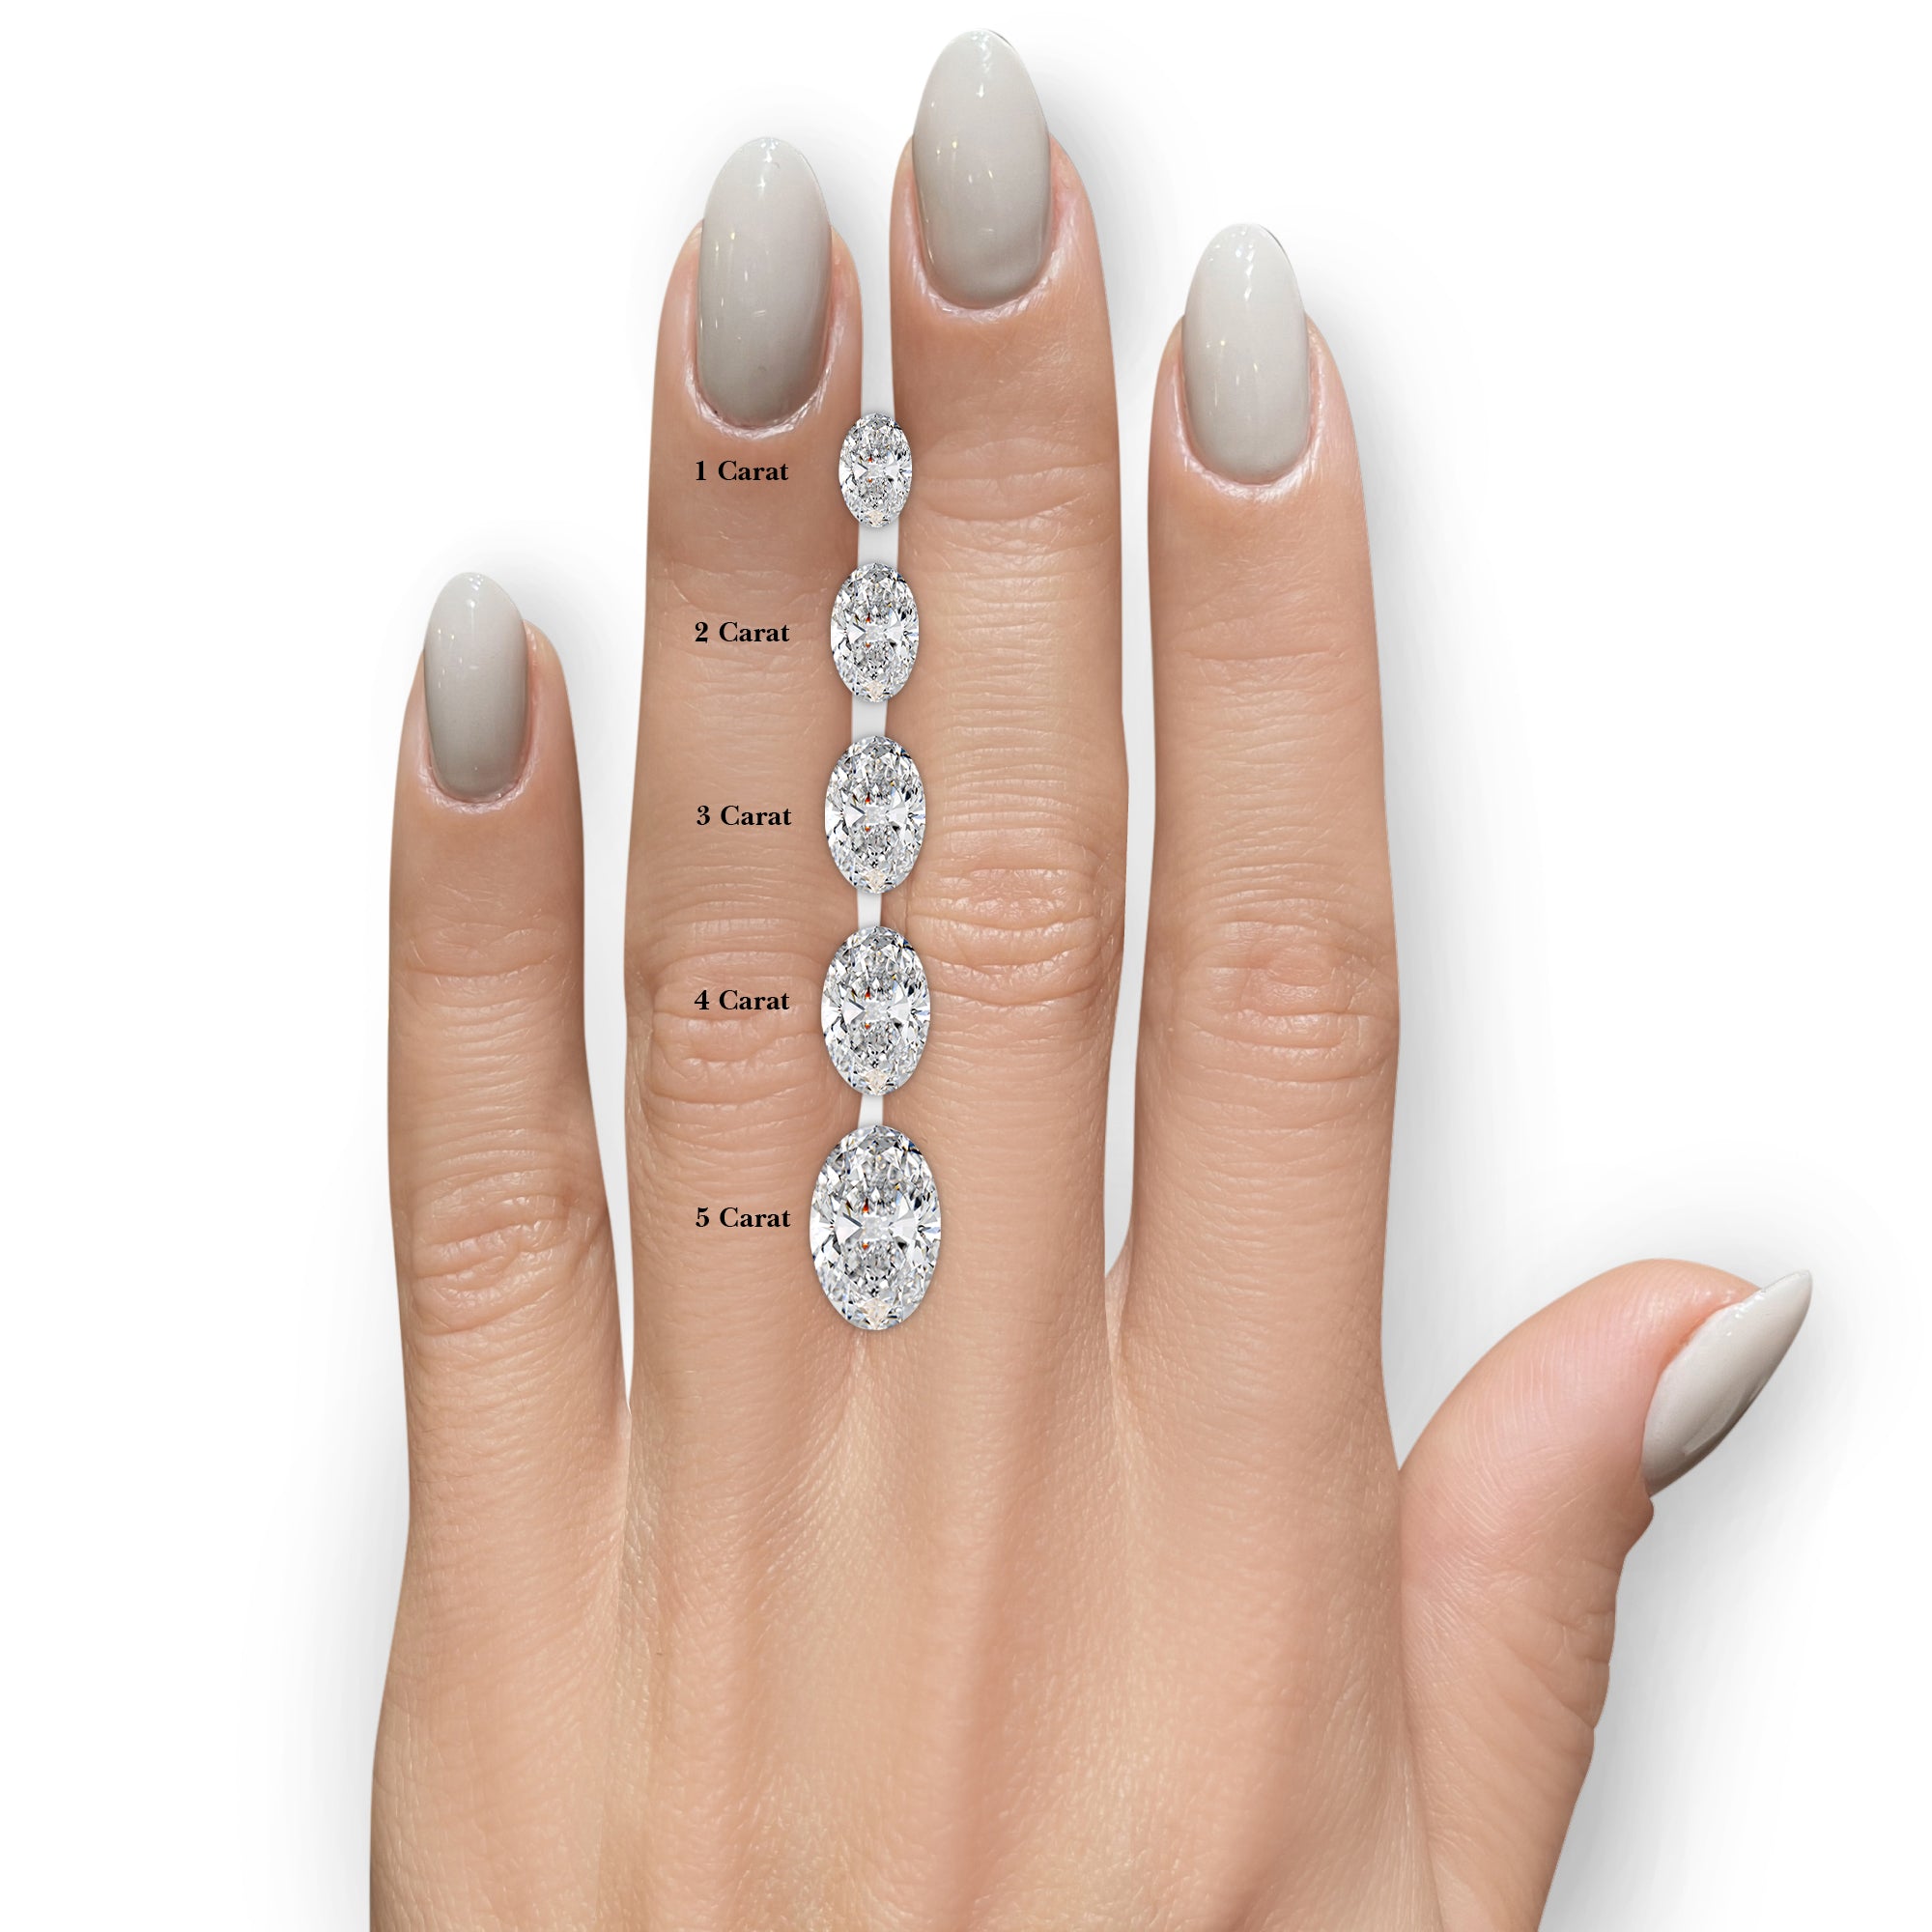 Alessandra Diamond Engagement Ring -18K Yellow Gold